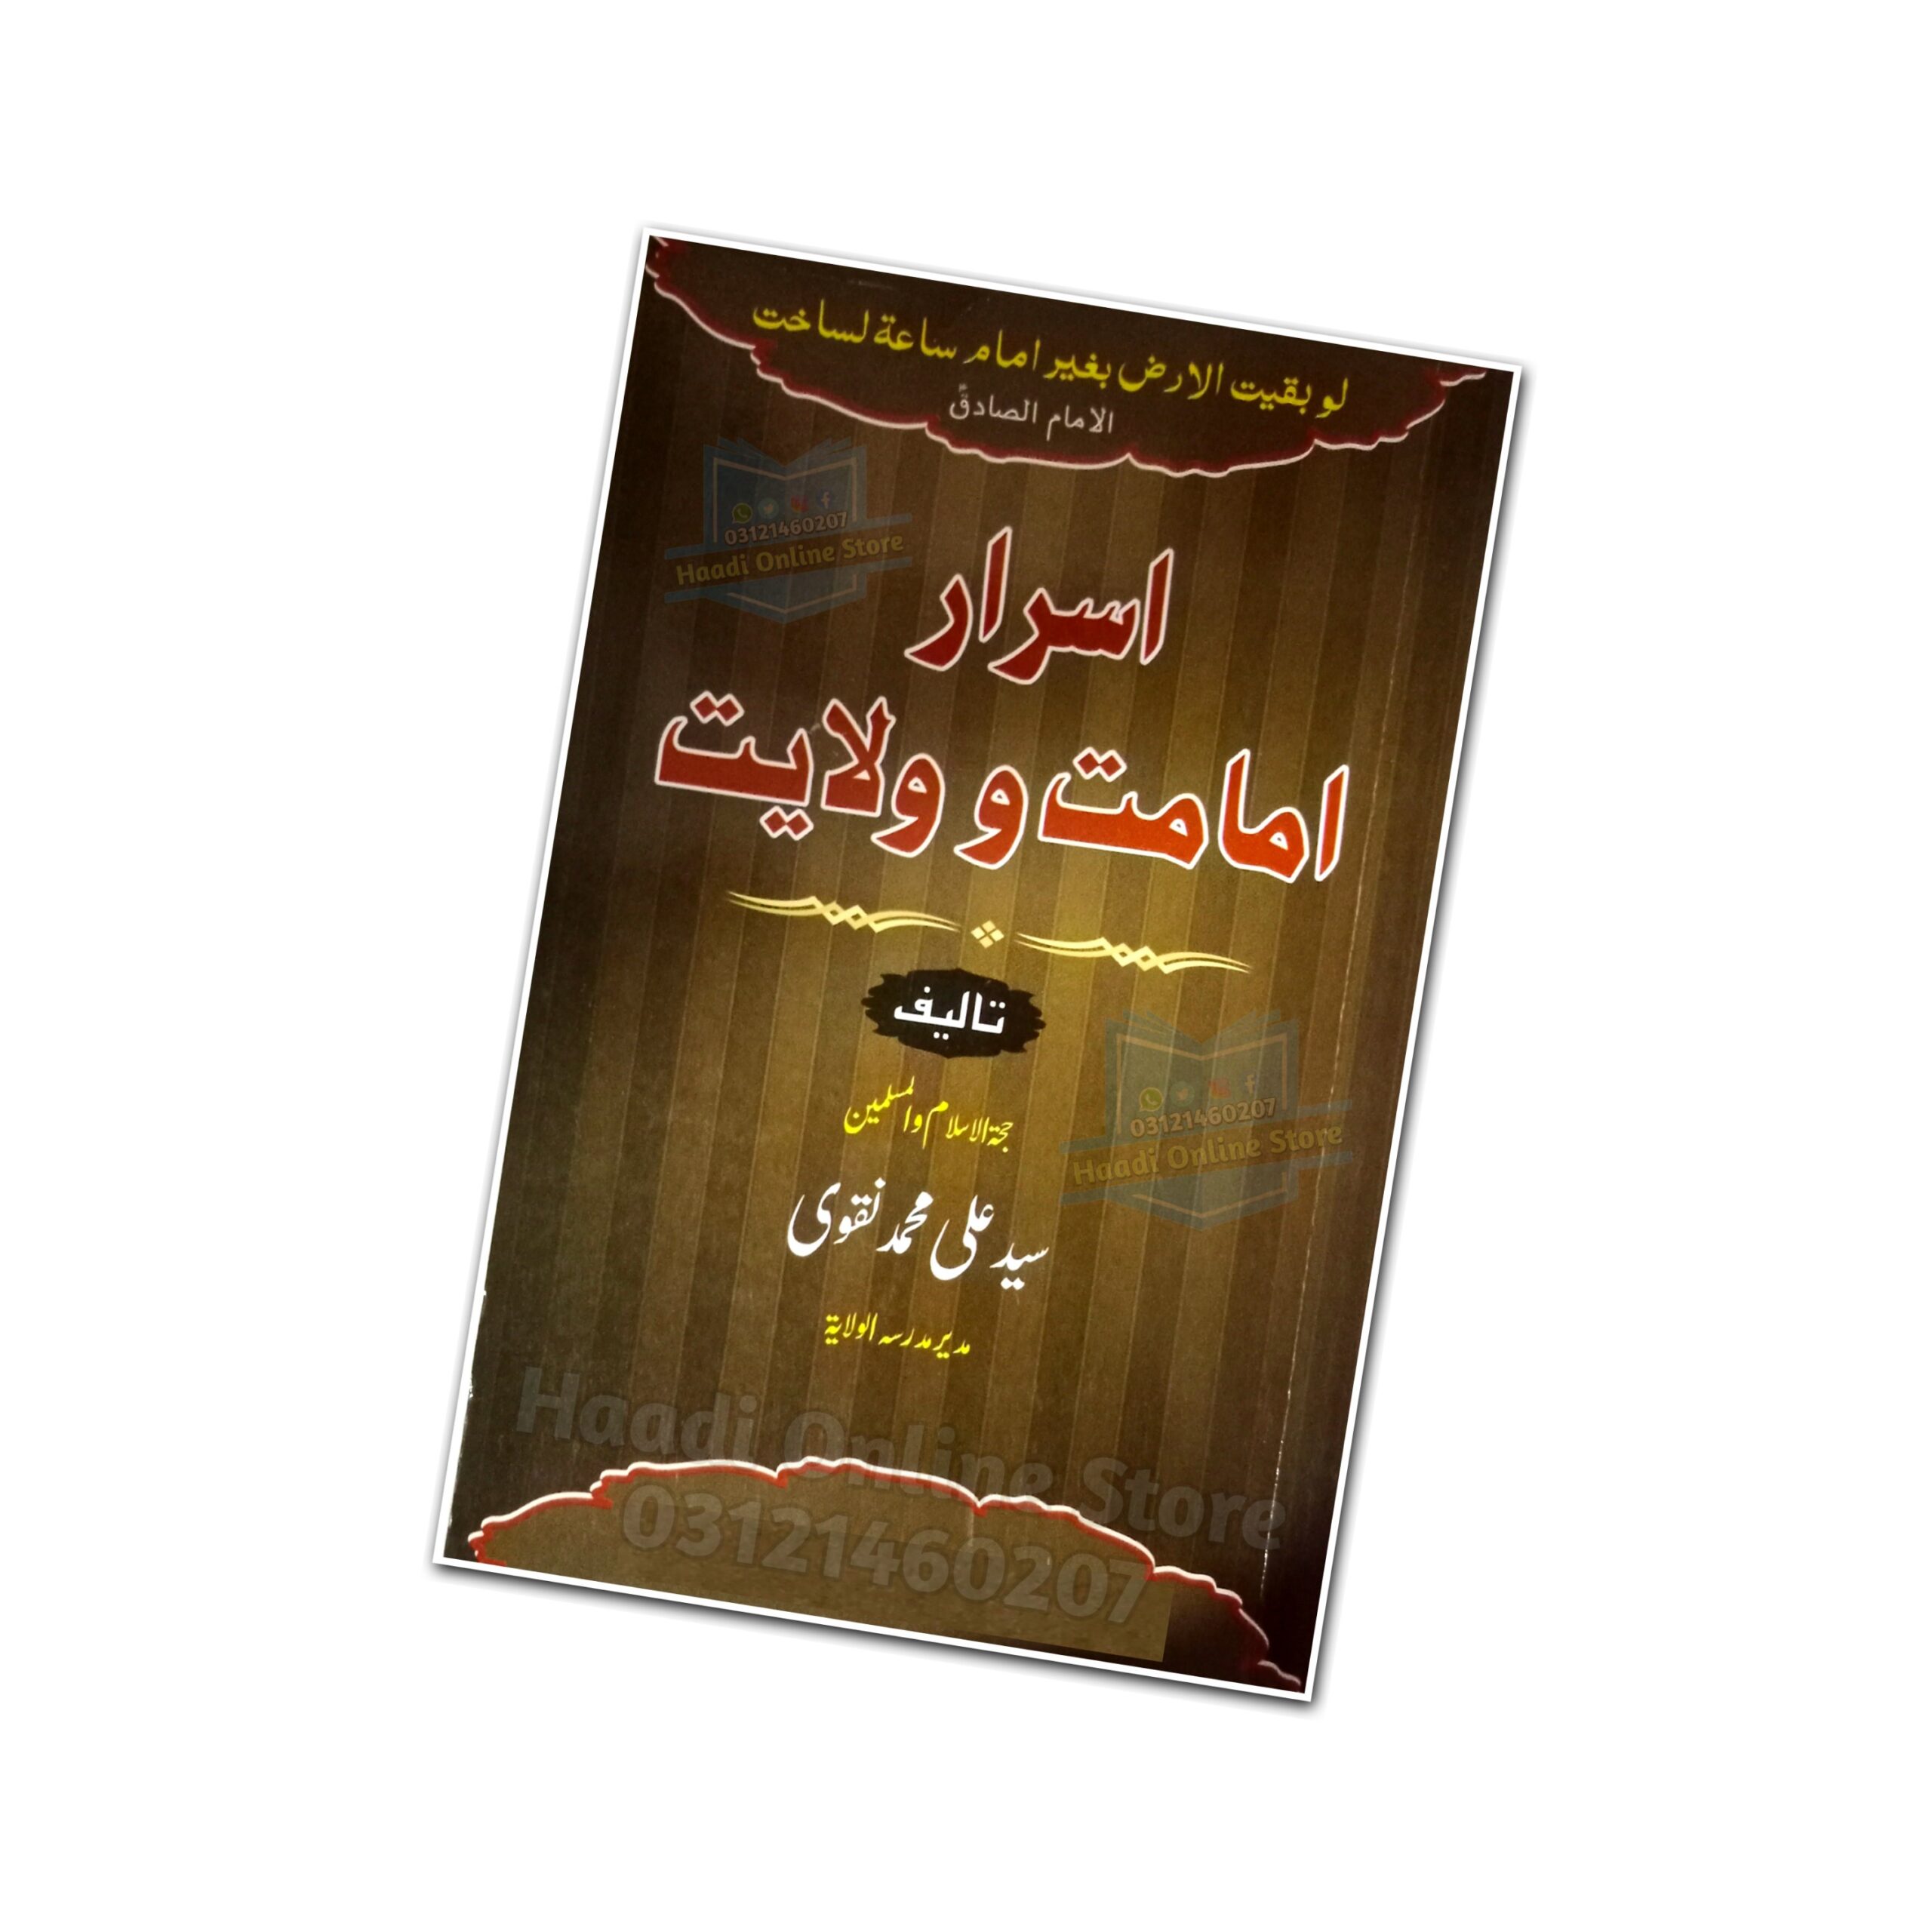 Israr e Imamat O Wilayat | اسرارِ امامت و ولایت | Best Book | Haadi Online Store